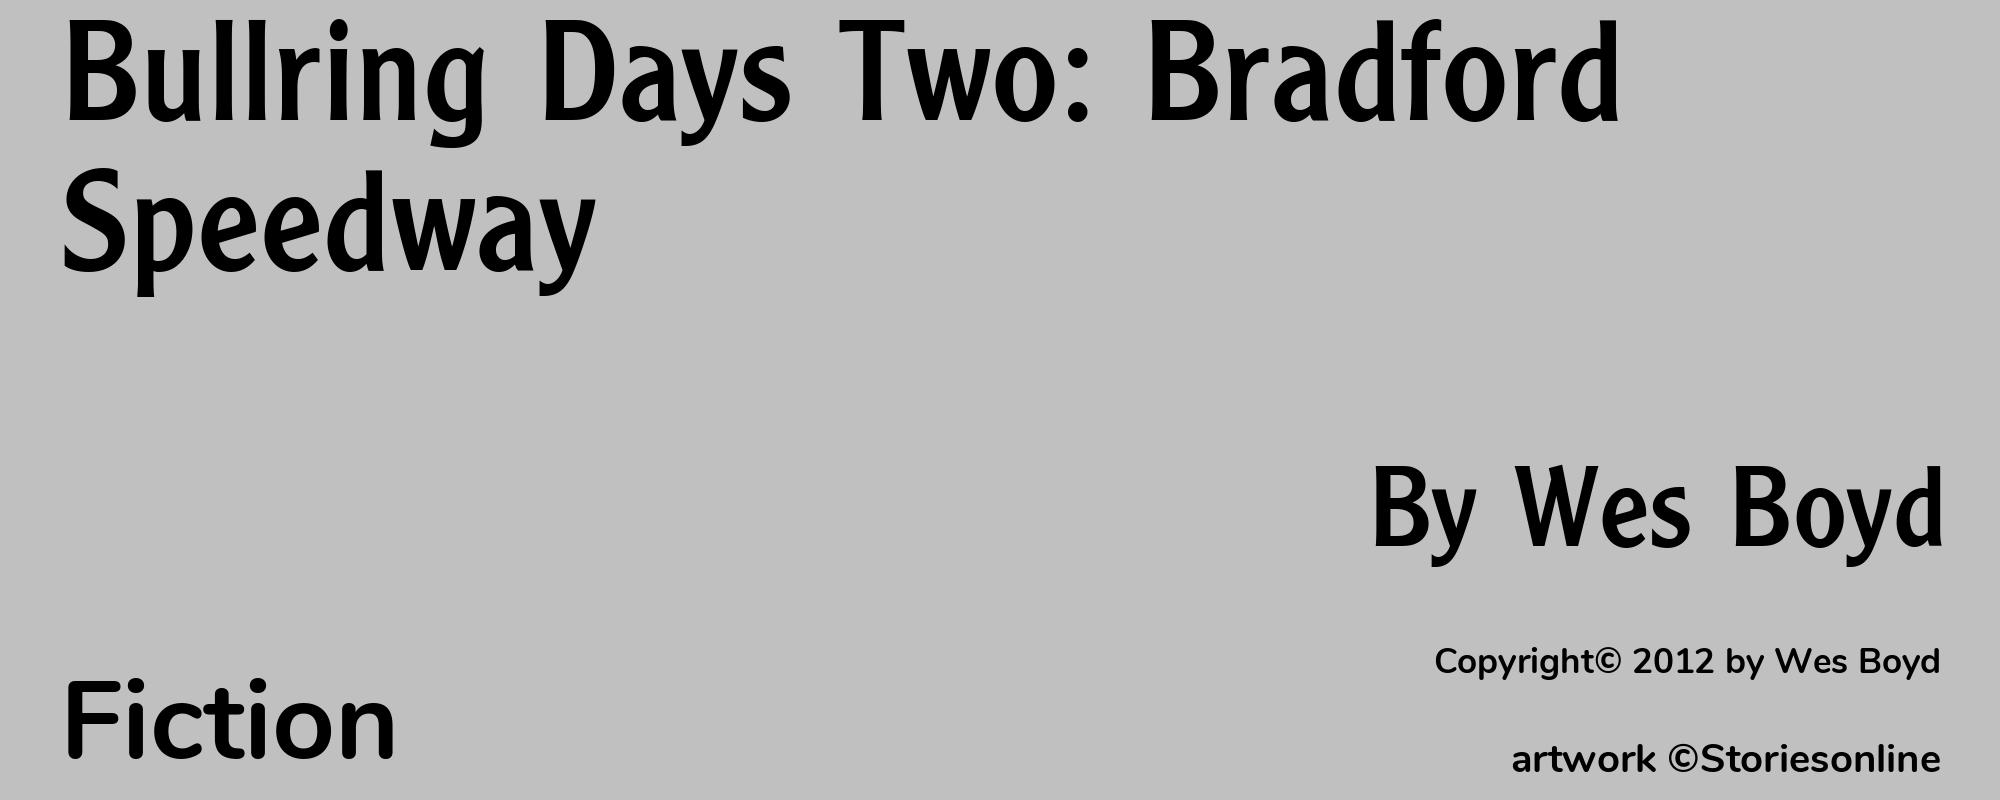 Bullring Days Two: Bradford Speedway - Cover